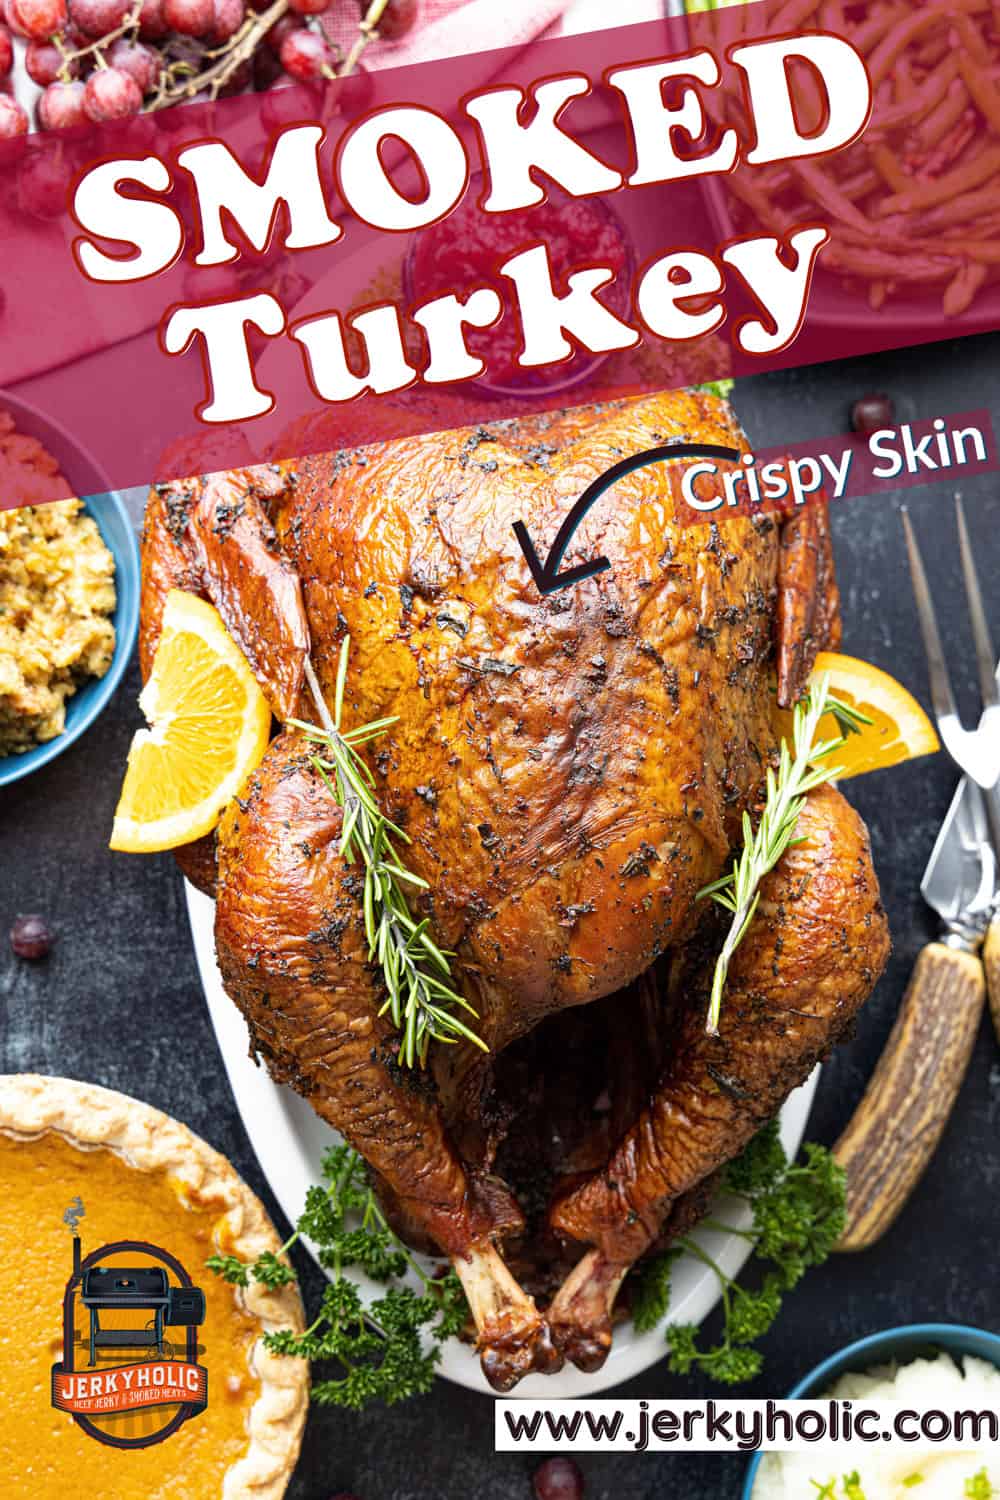 Perfectly Smoked Turkey (Crispy Skin)